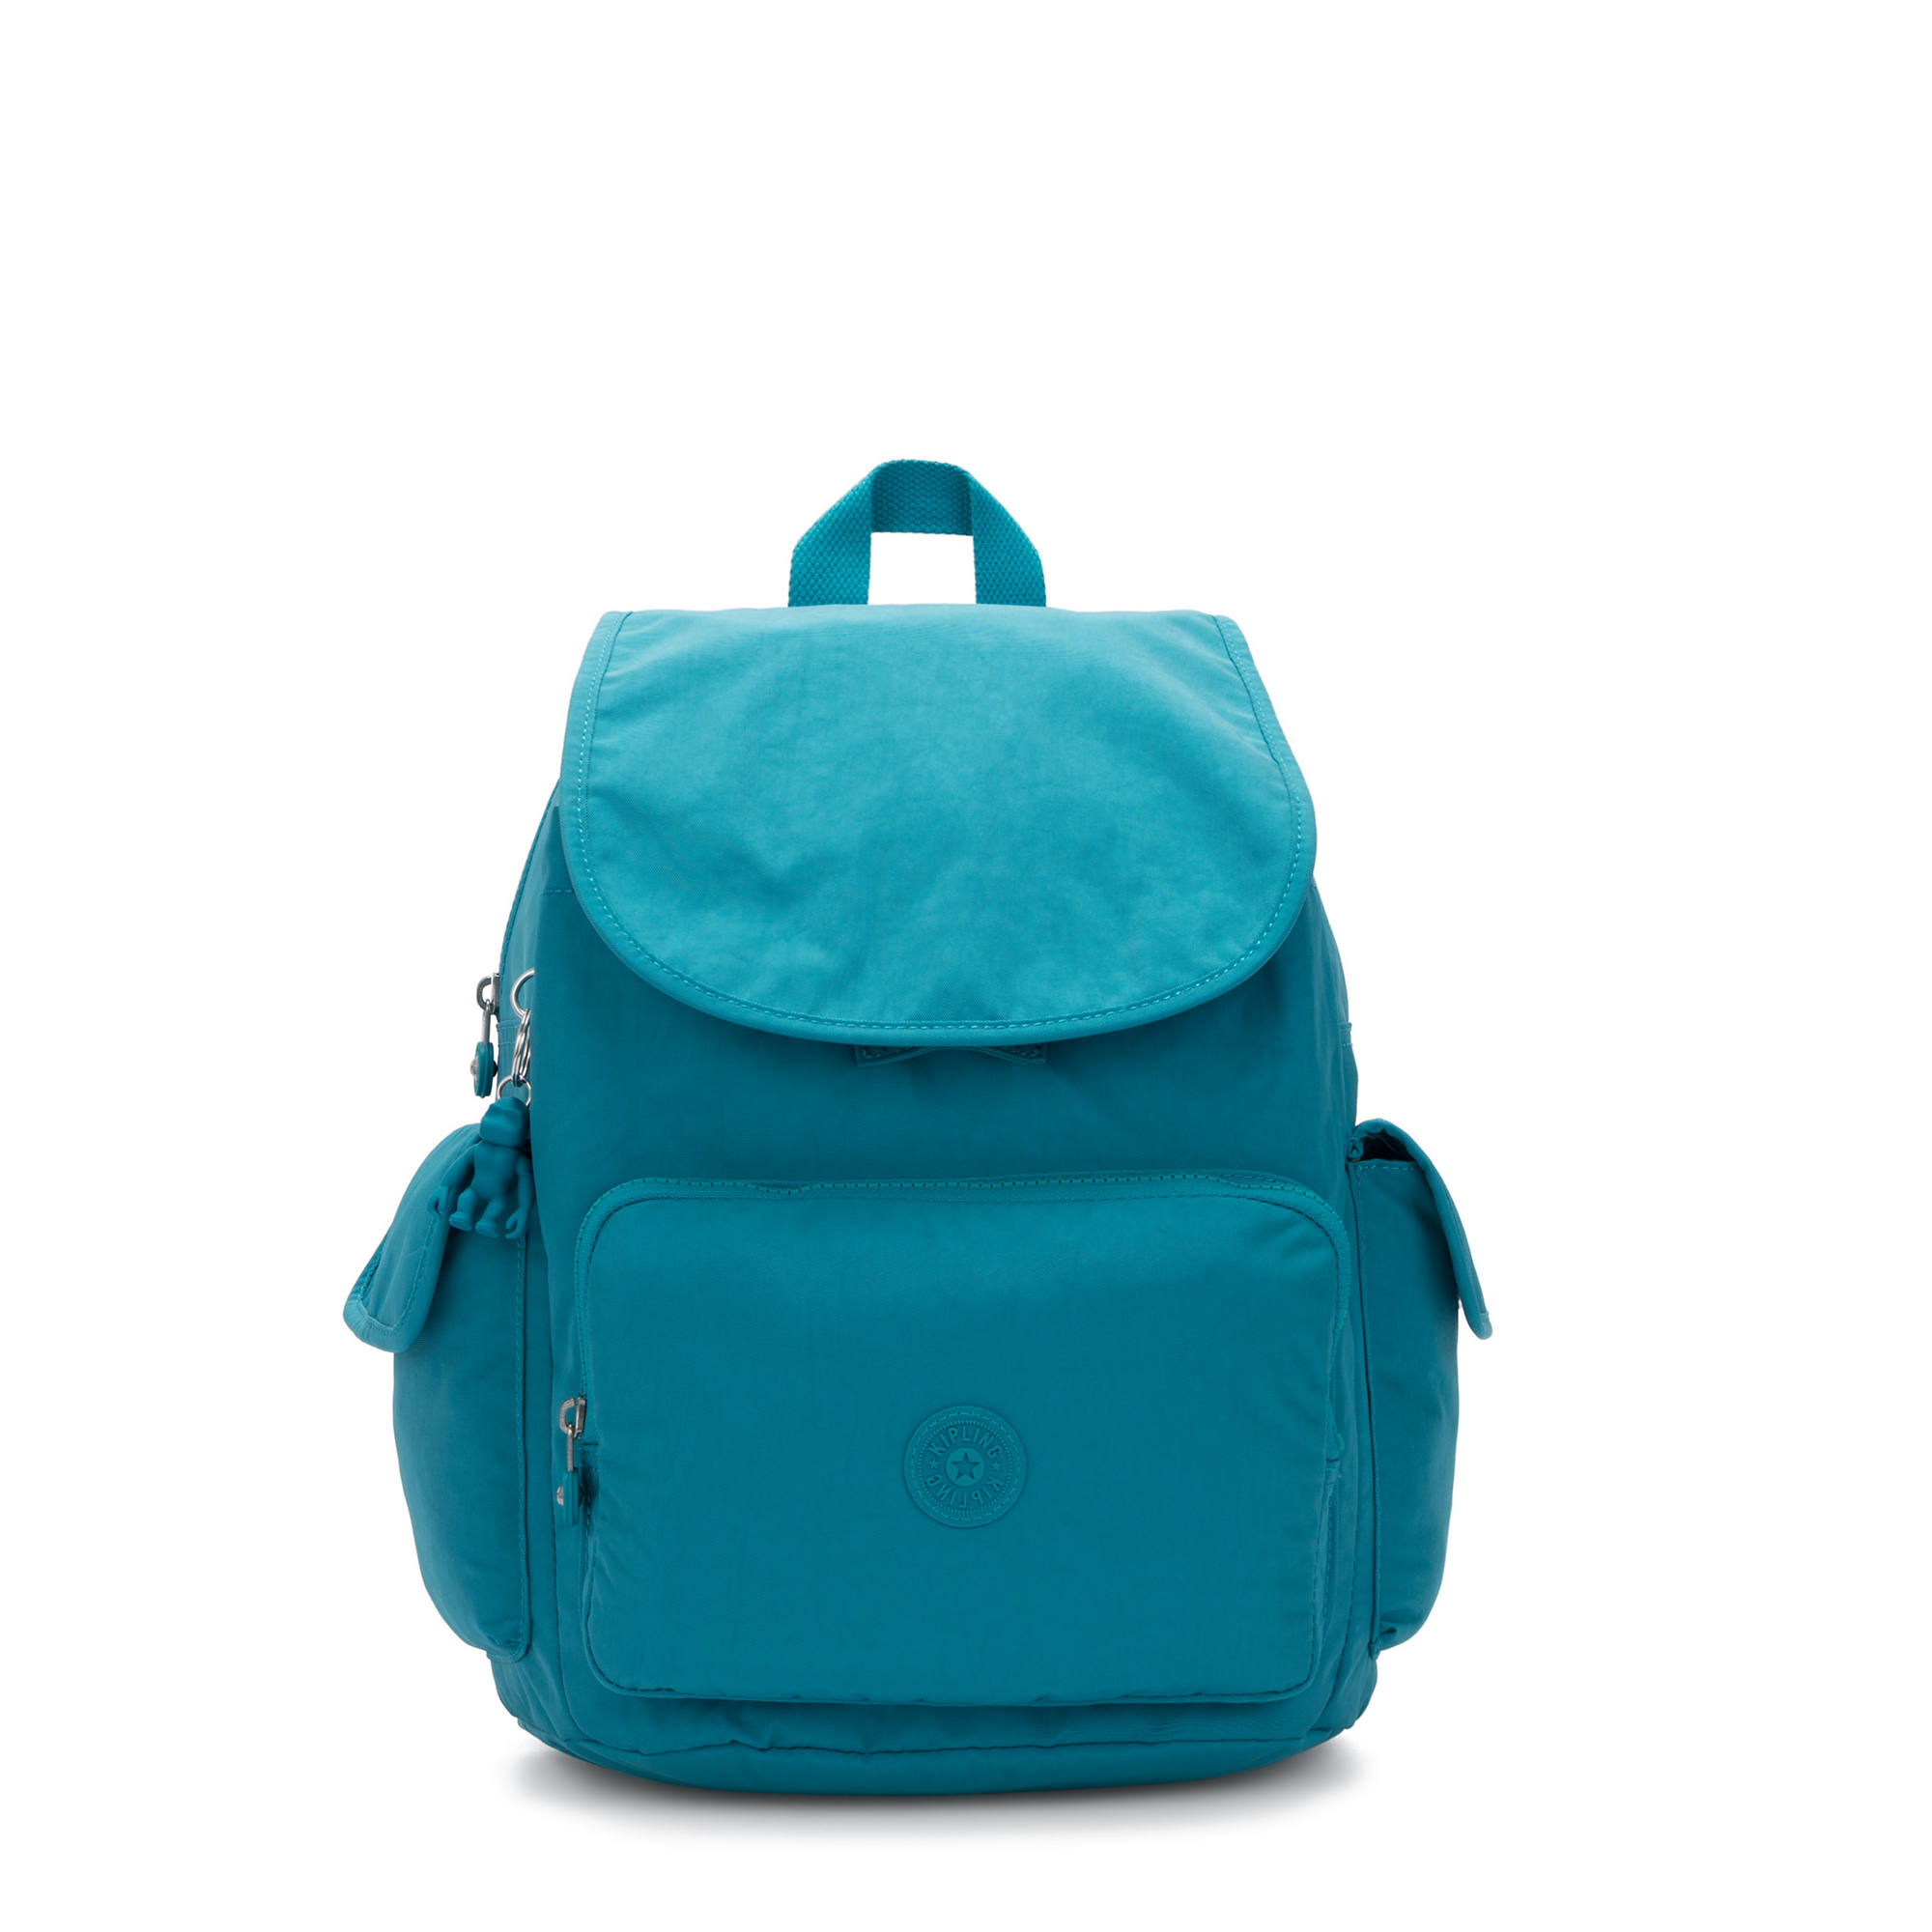 City Pack Medium Backpack,Turquoise Sea,large-zoomed